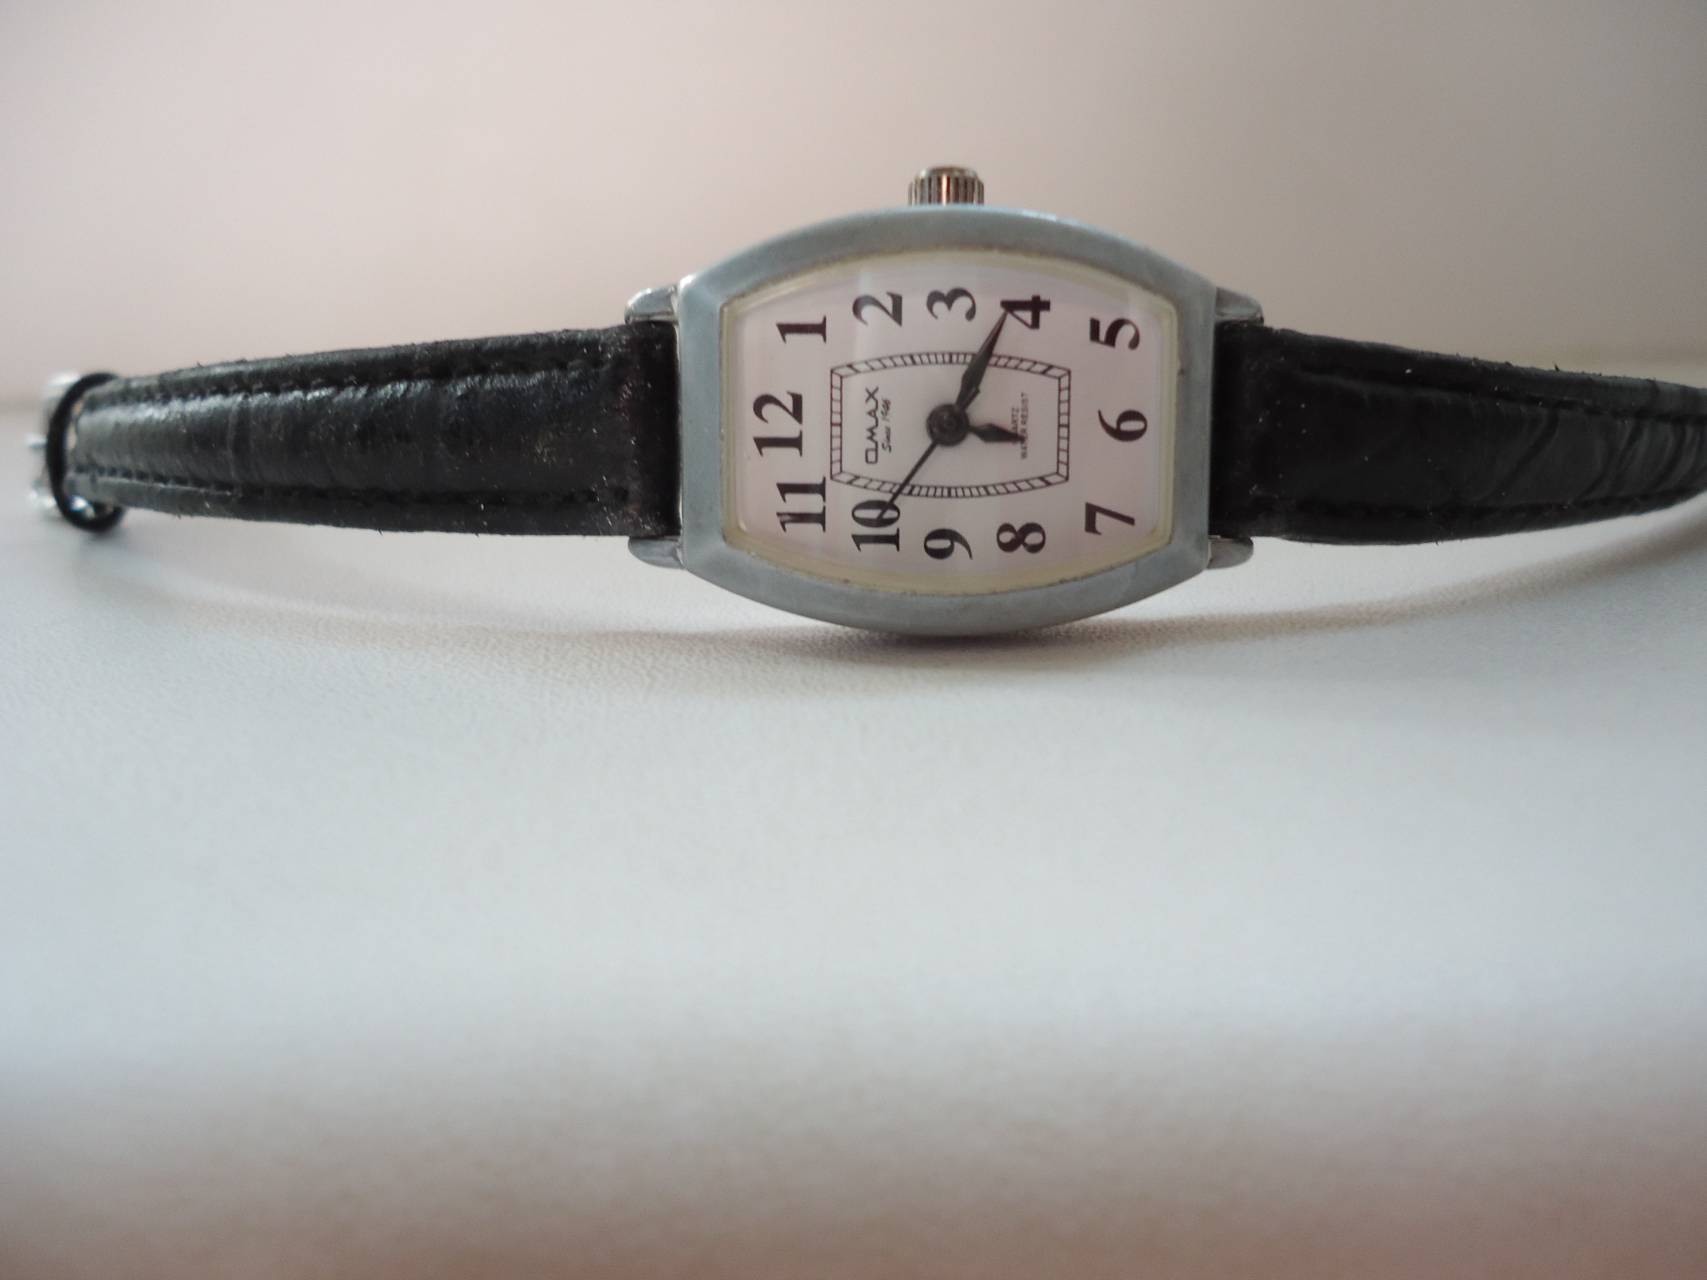 Since 1946. OMAX since 1946. Наручные часы омакс 1946. Qmax часы since 1946. Наручные часы OMAX since 1946.